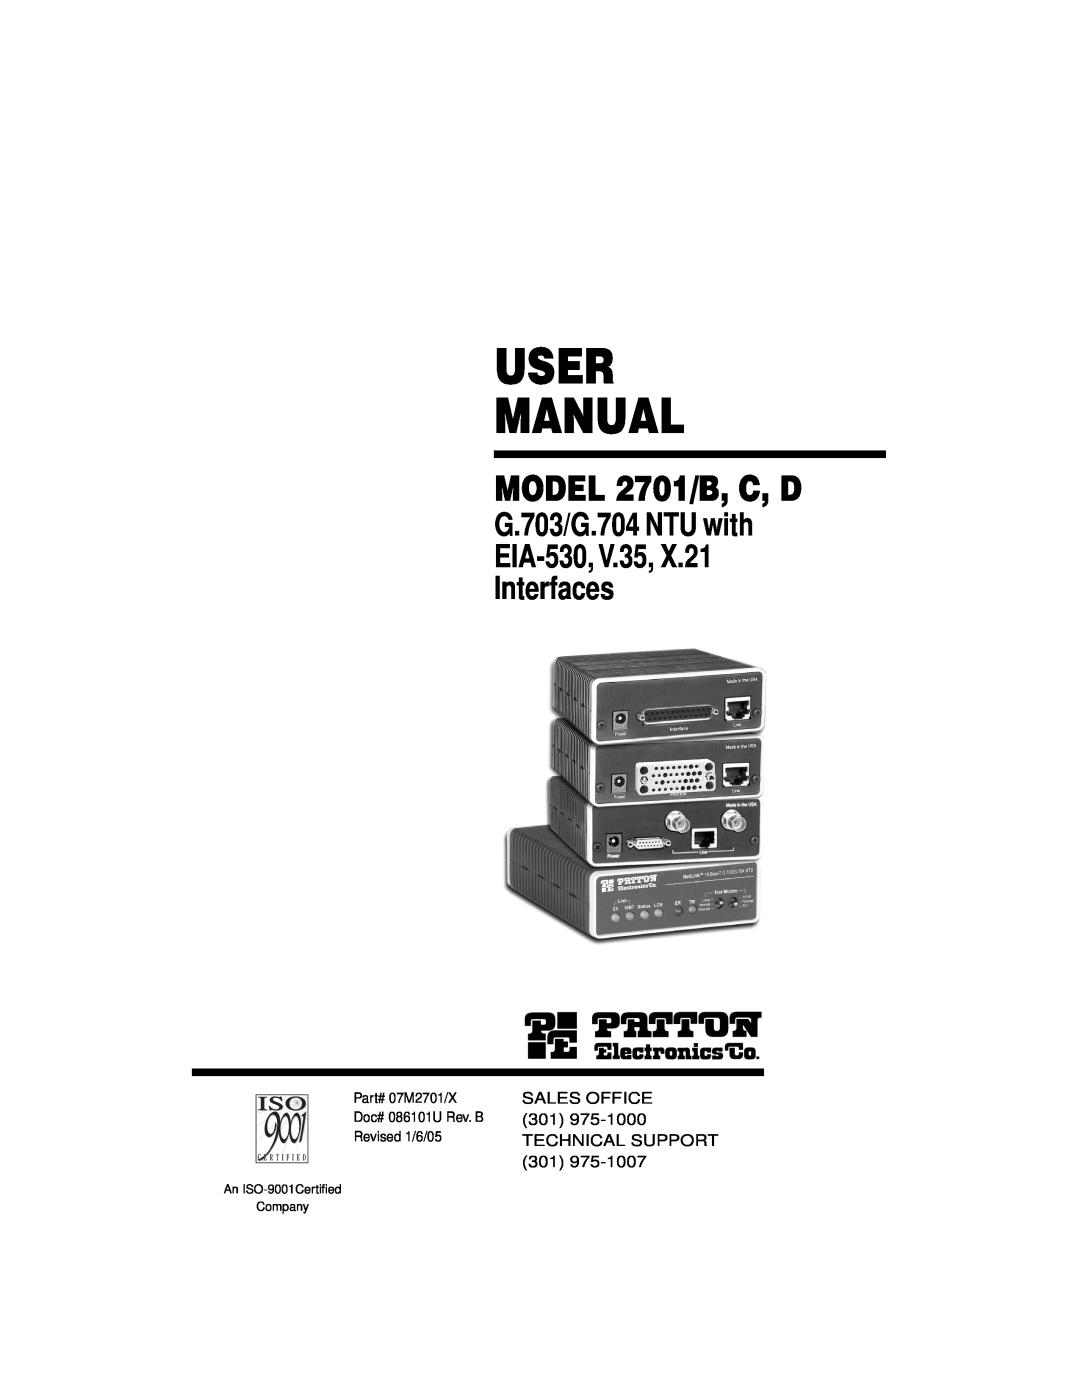 Patton electronic 2701/D user manual User Manual, MODEL 2701/B, C, D, G.703/G.704 NTU with EIA-530, V.35 Interfaces 